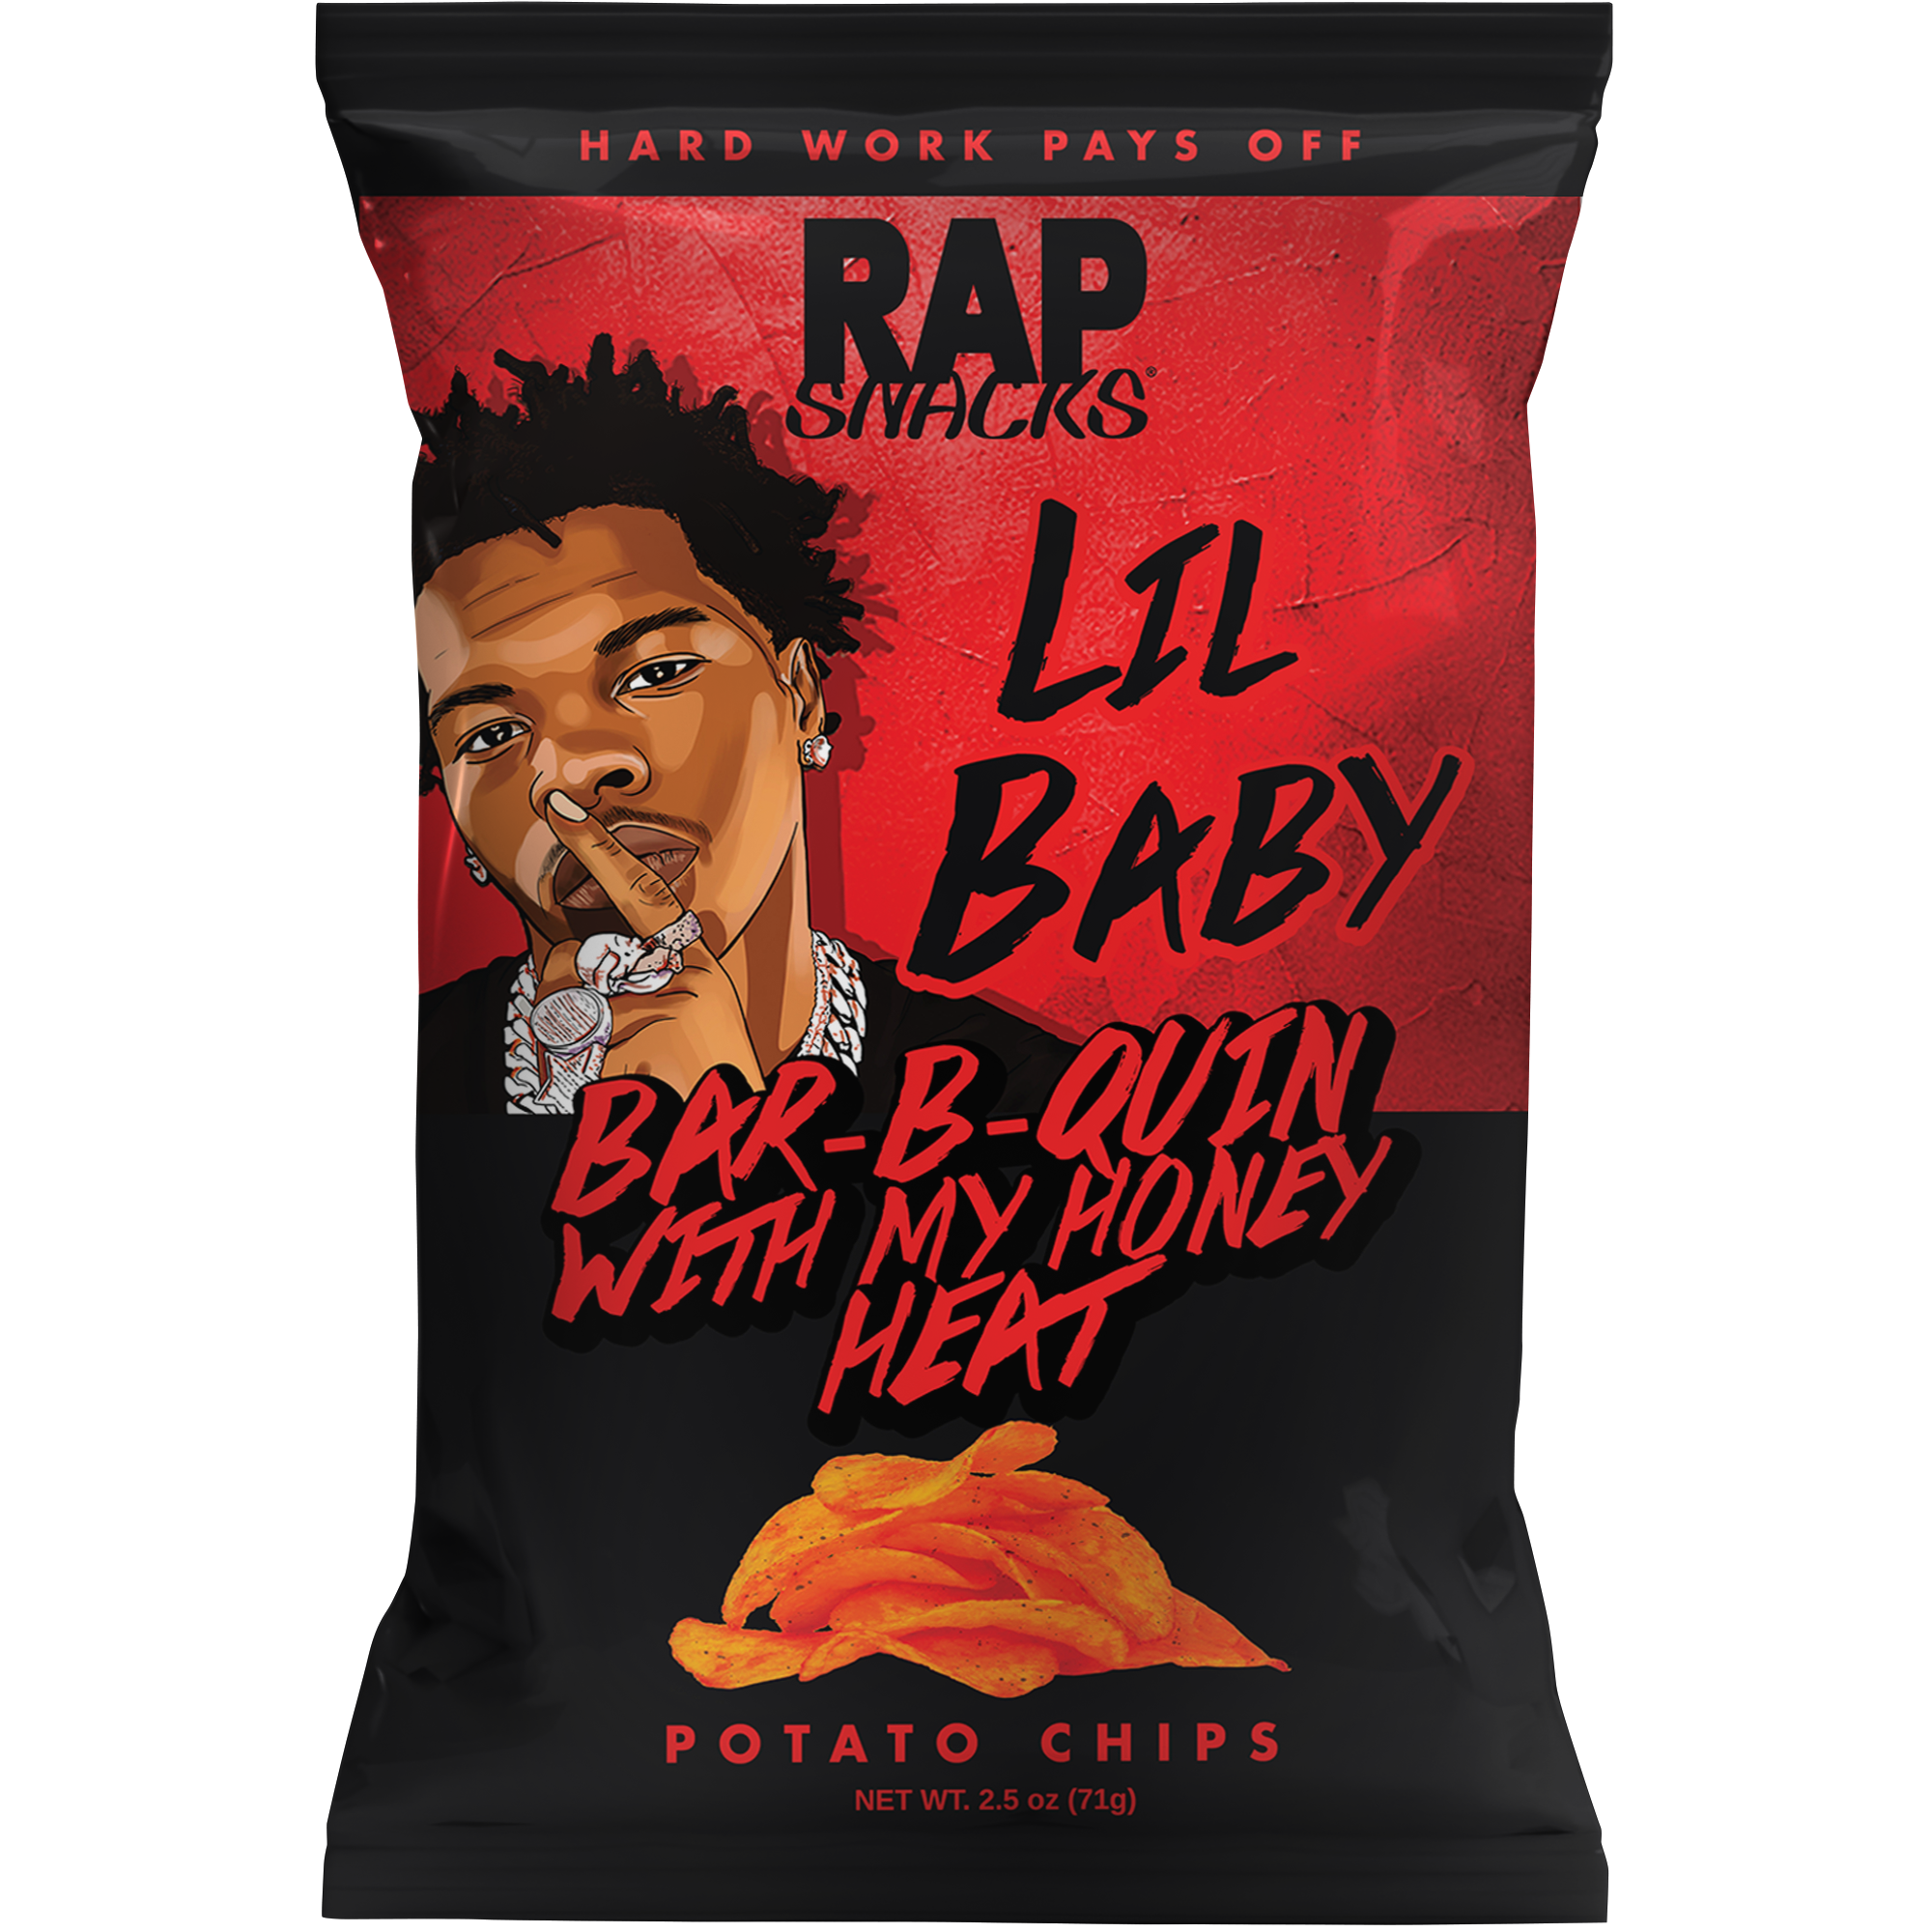 Contract Bulk Kort geleden Lil Baby | Bar-B-Quin with my Honey Heat Potato Chips (6 Bags) – OFFICIAL  RAP SNACKS